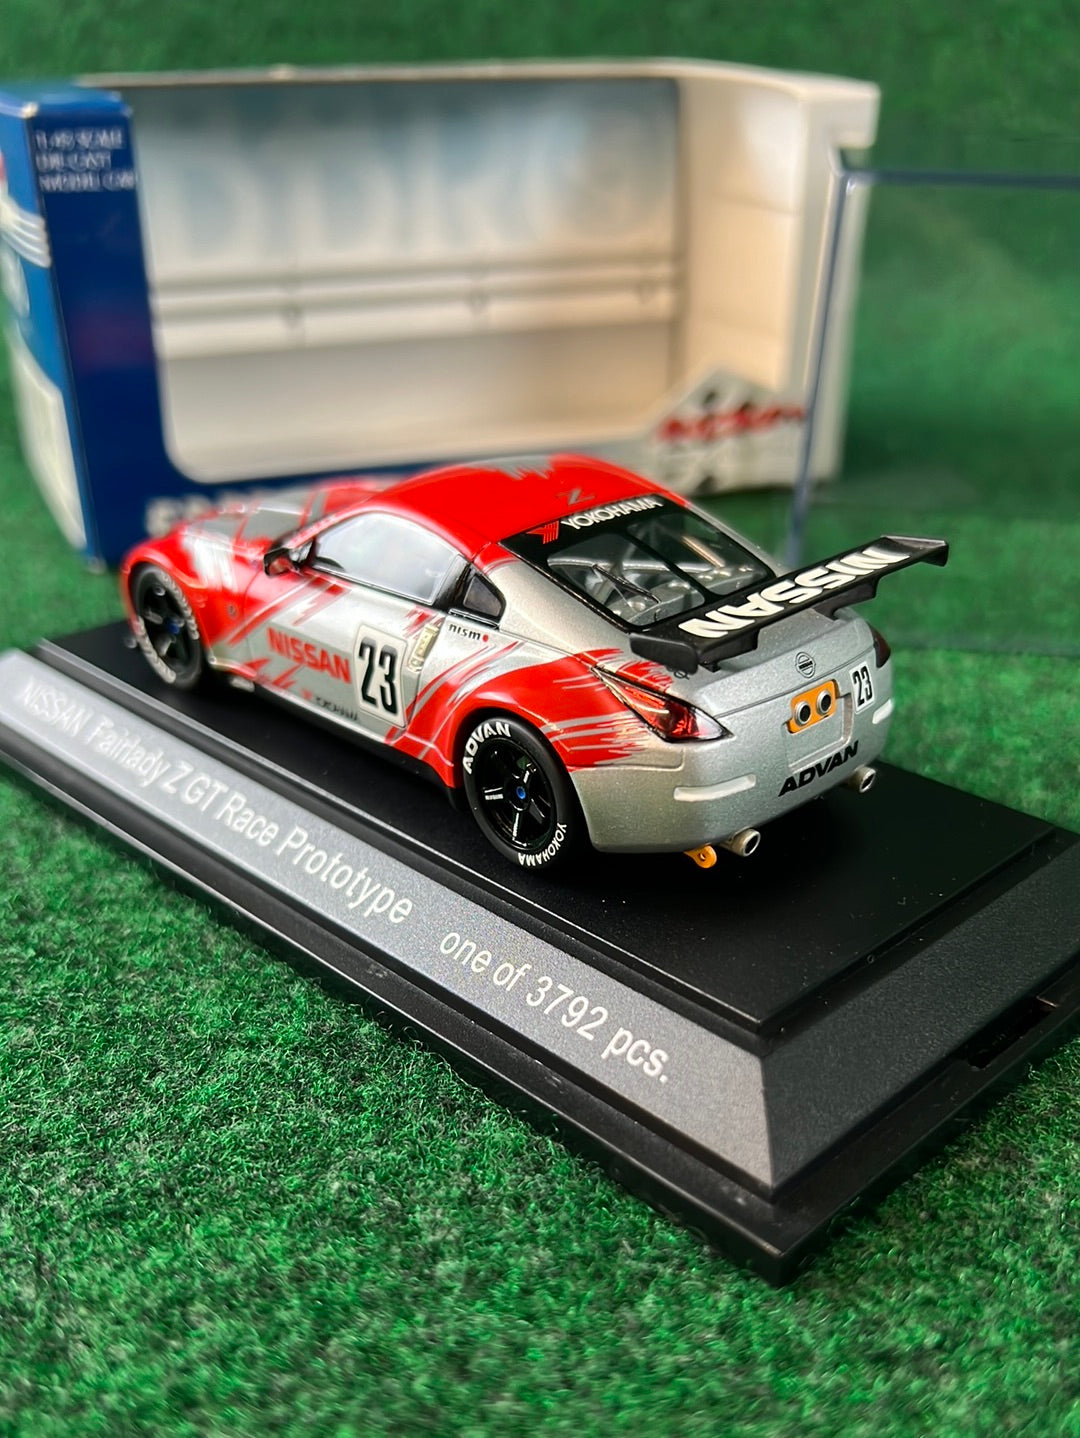 EBBRO Nissan Fairlady Z GT Race Prototype Car (1 of 3,792) 1/43 Scale Diecast